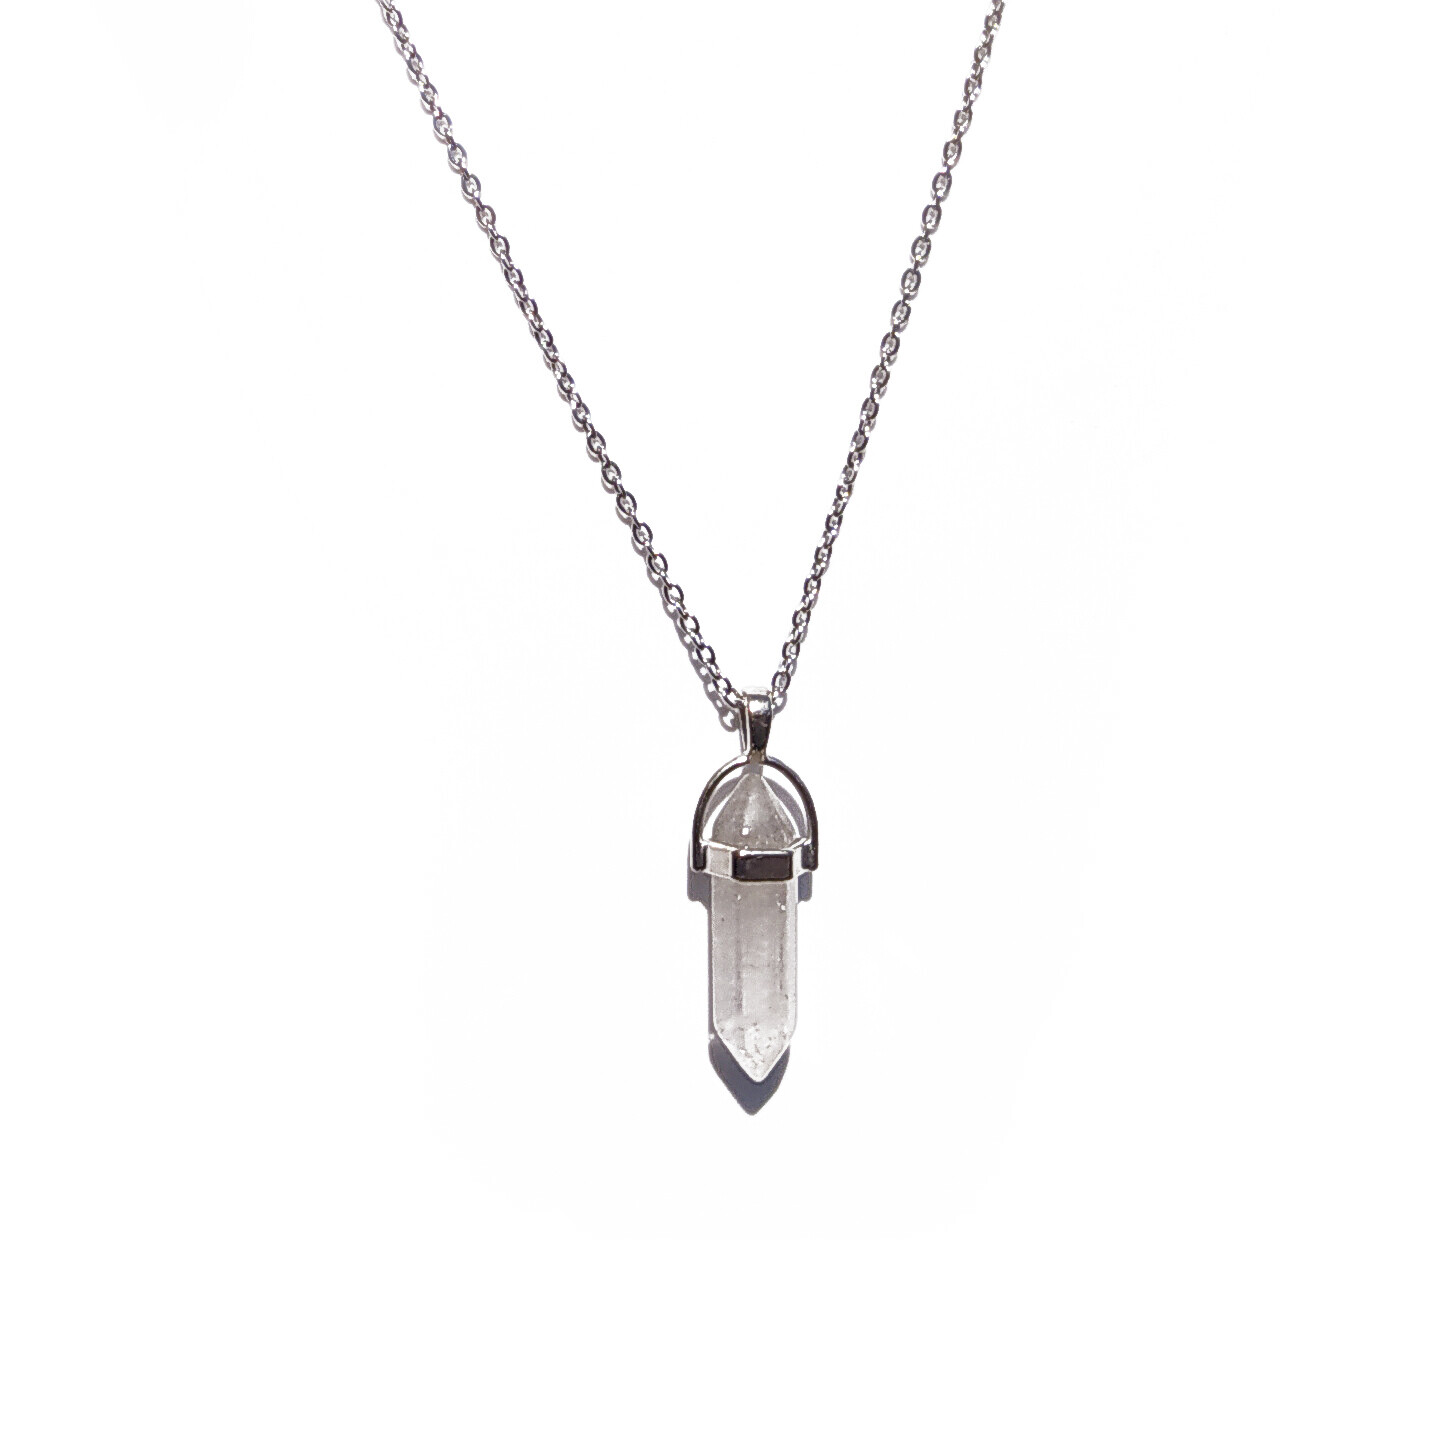 Clear Quartz pendant gemstone necklace